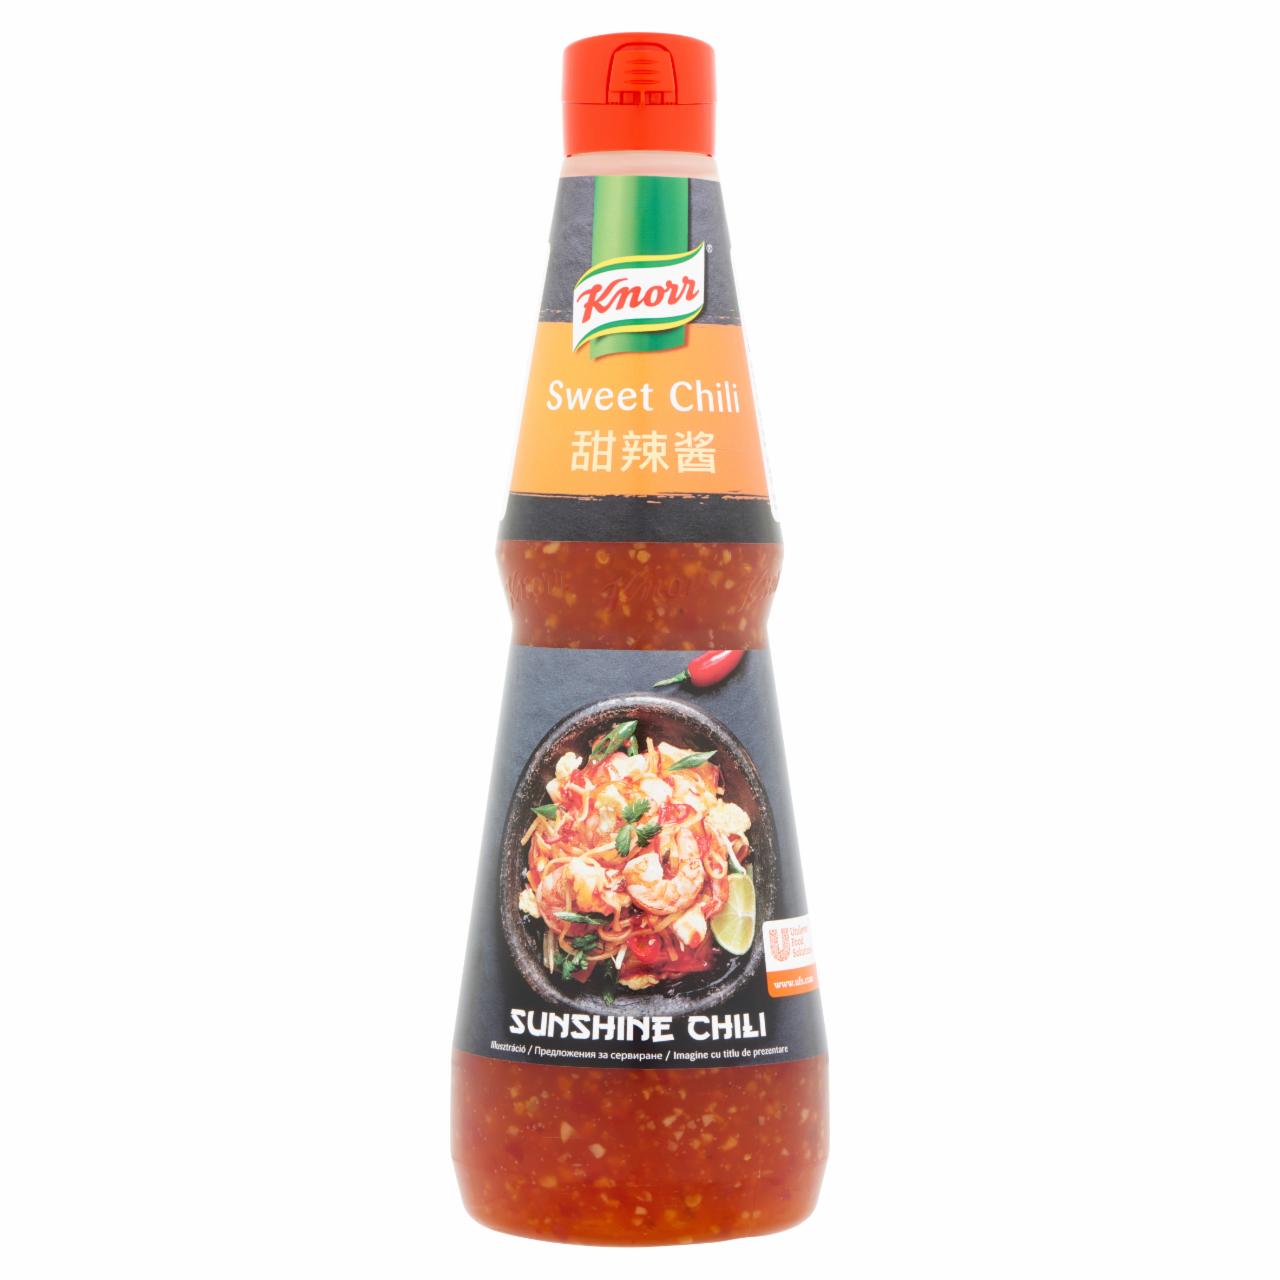 Képek - Knorr Sunshine Chili chili-fokhagyma szósz 1 l